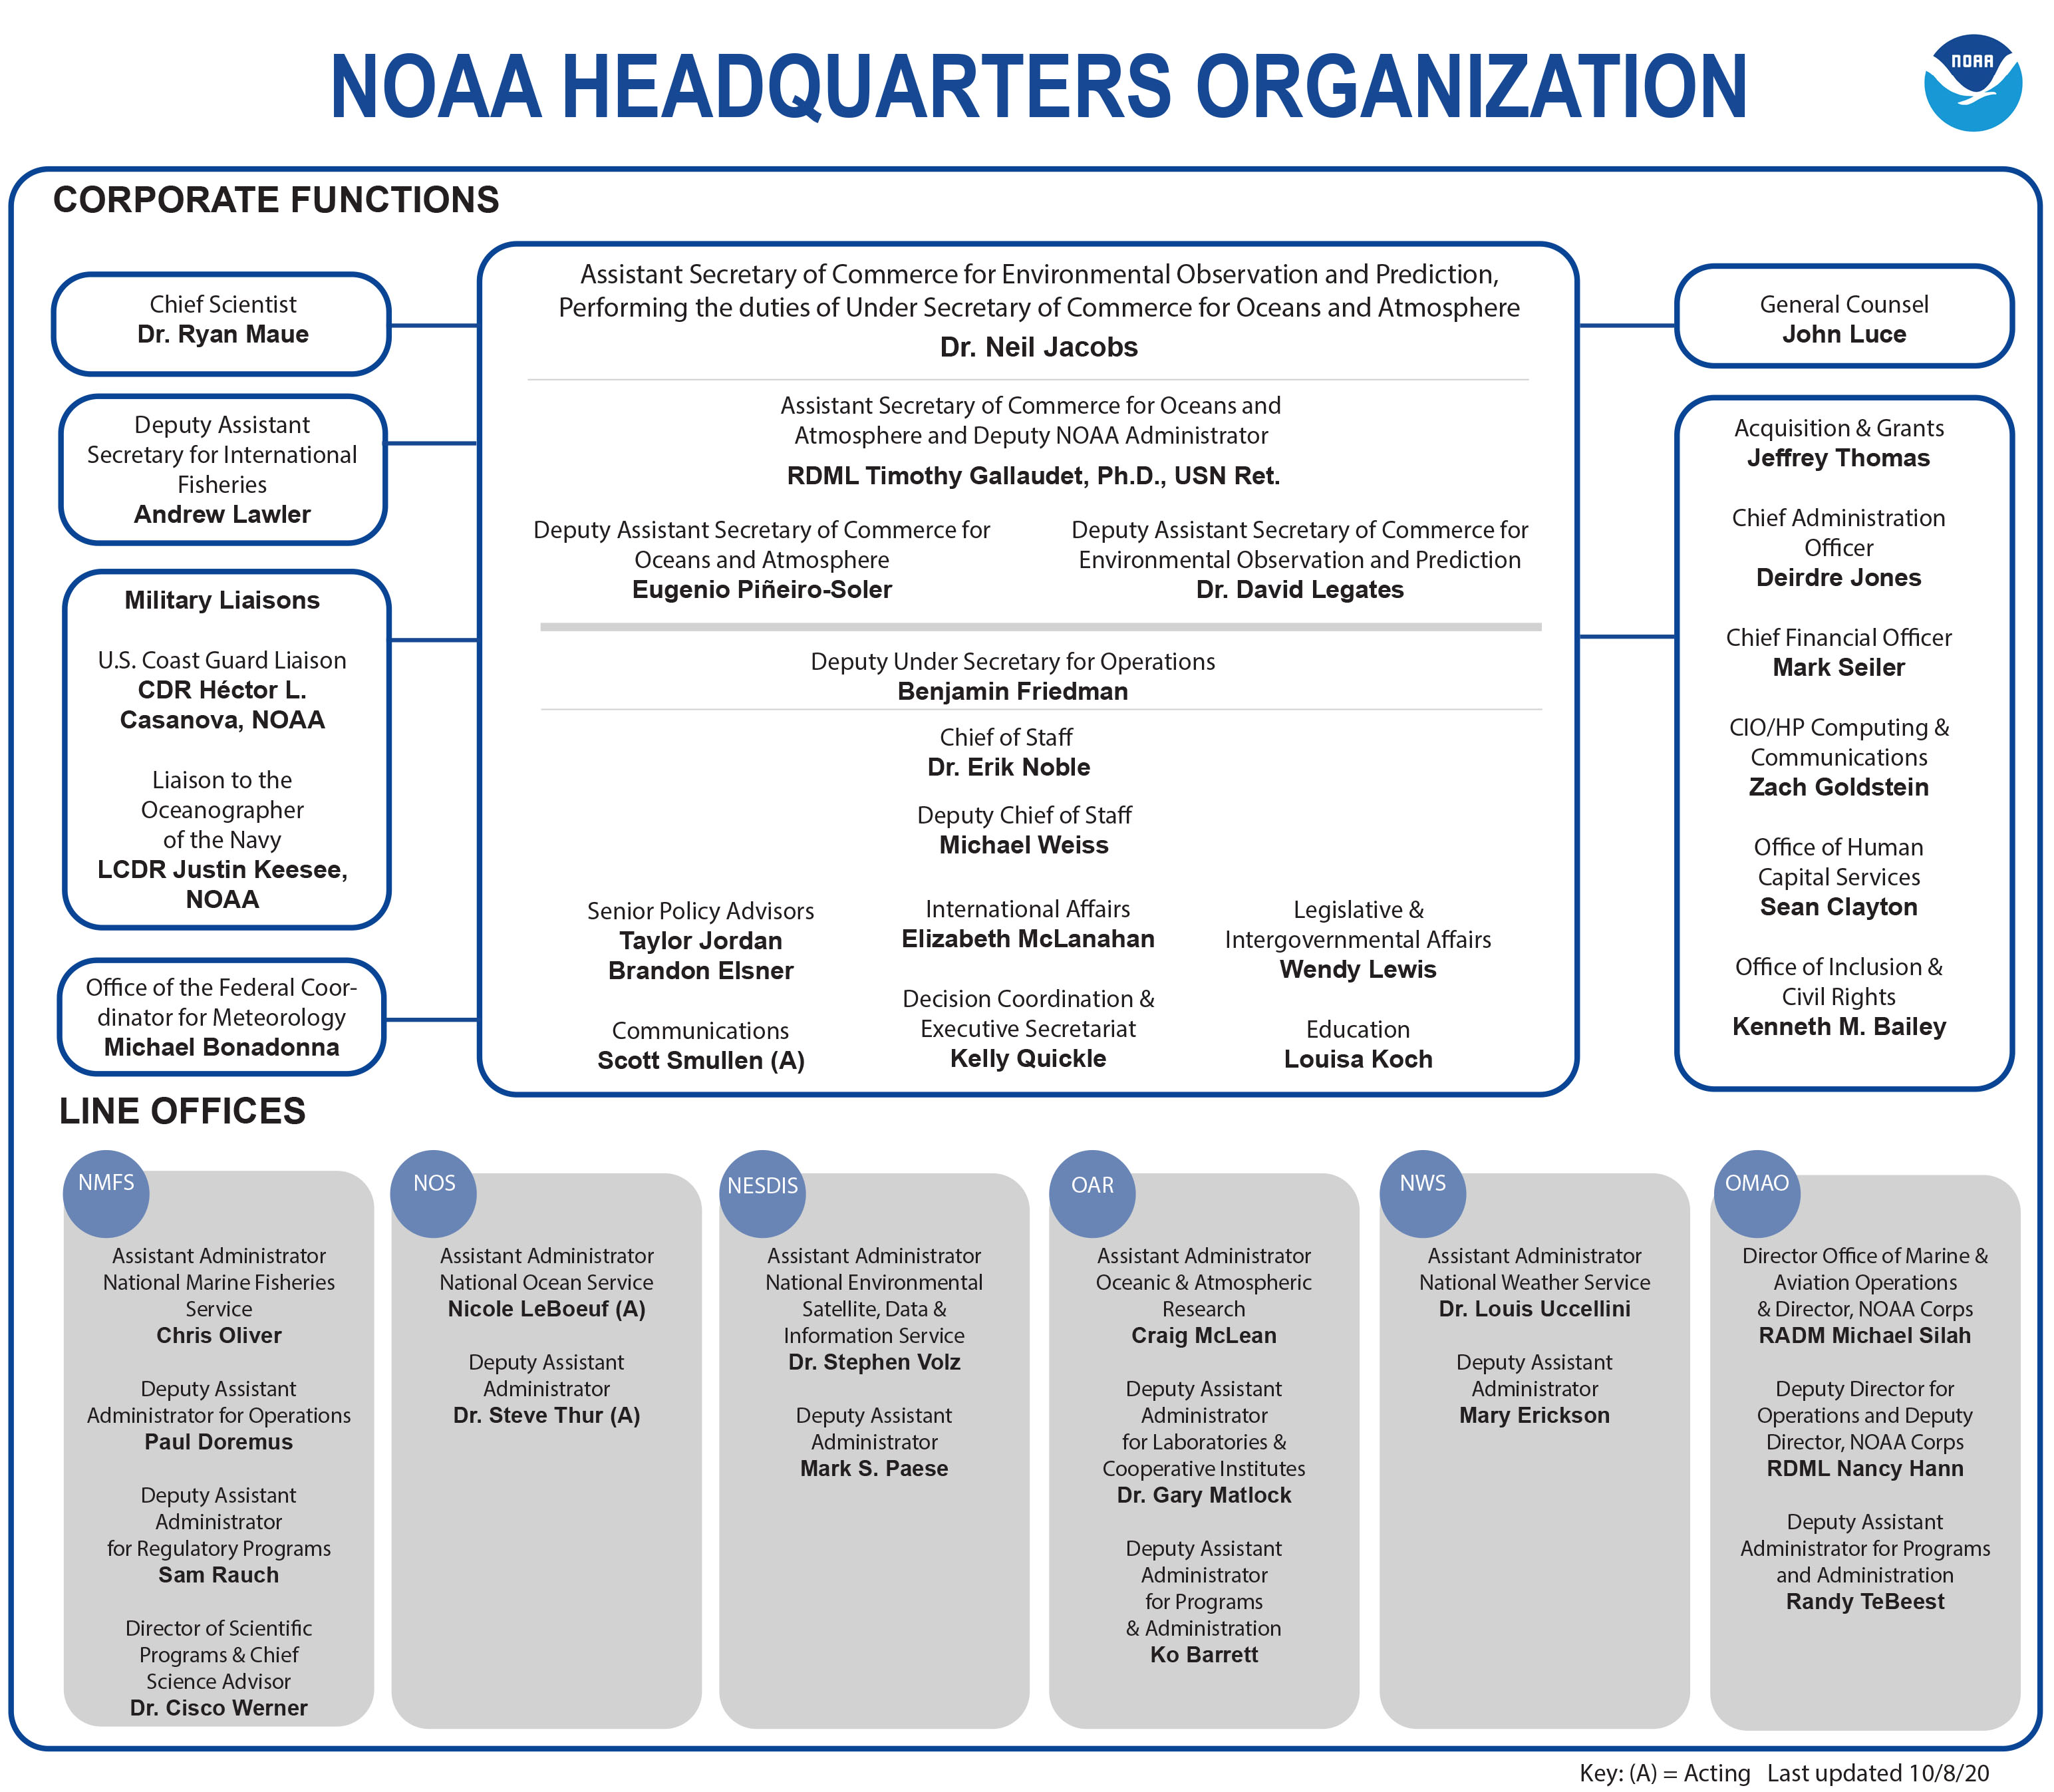 NOAA organization chart effective Oct. 8, 2020.